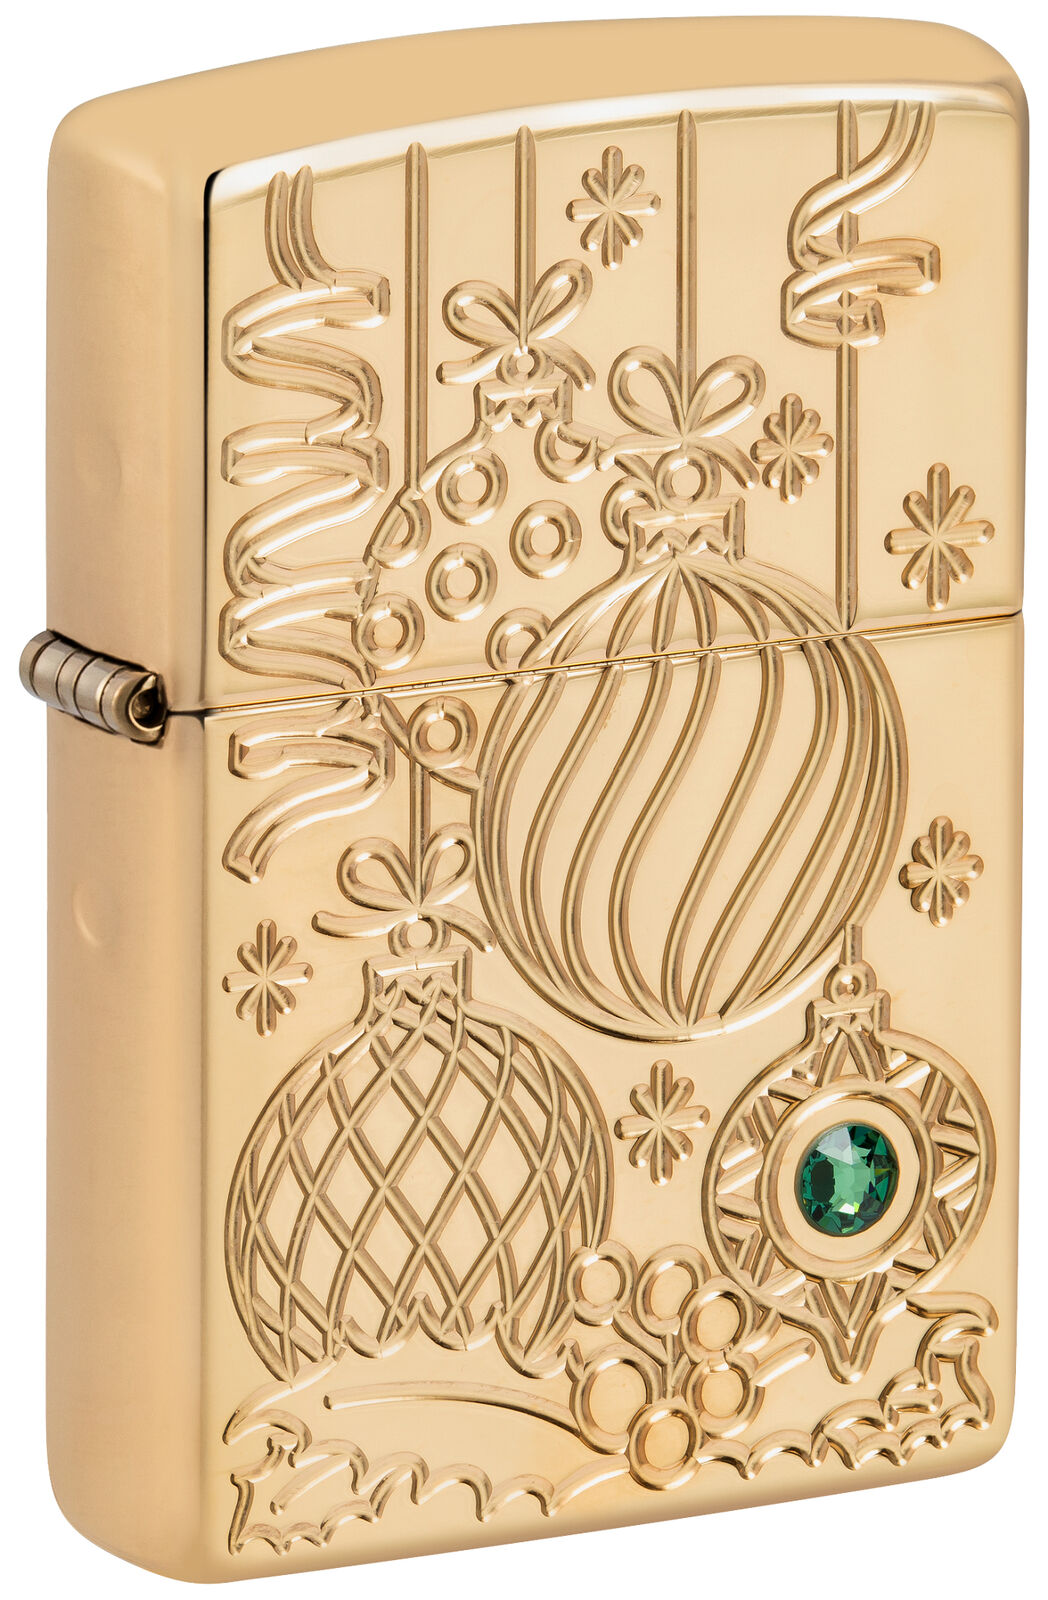 Zippo 'exclusive' Christmas Ornament Design, 169-110969